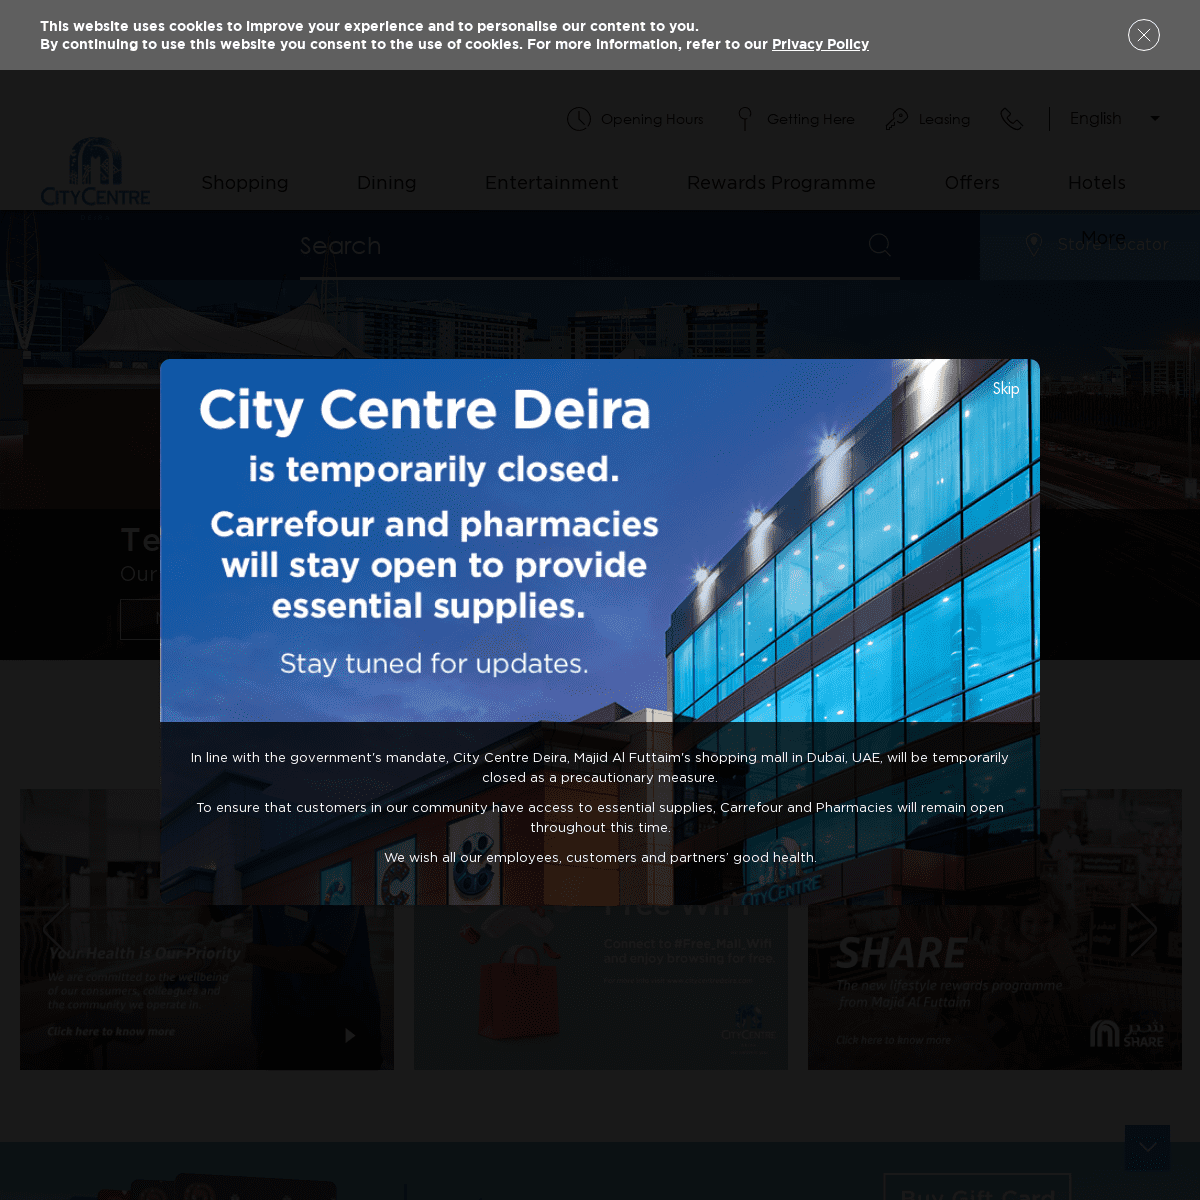 A complete backup of citycentredeira.com